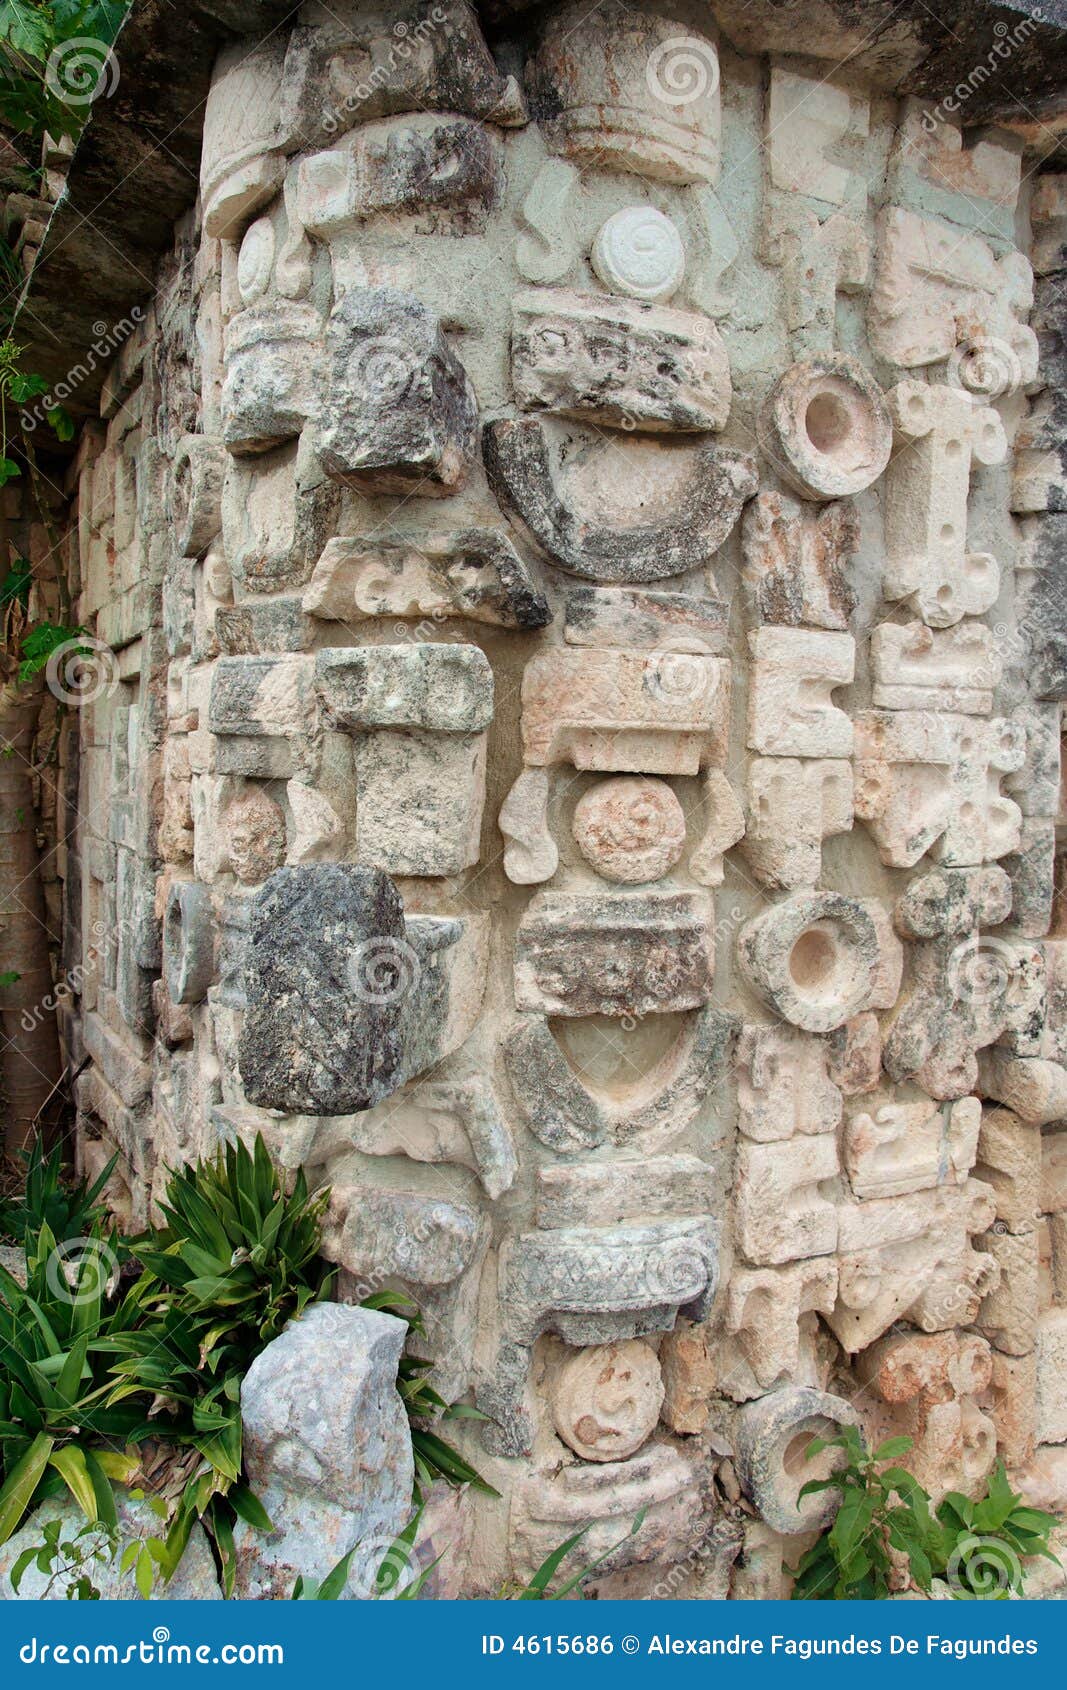 chac mayan rain god in uxmal yucatan mexico